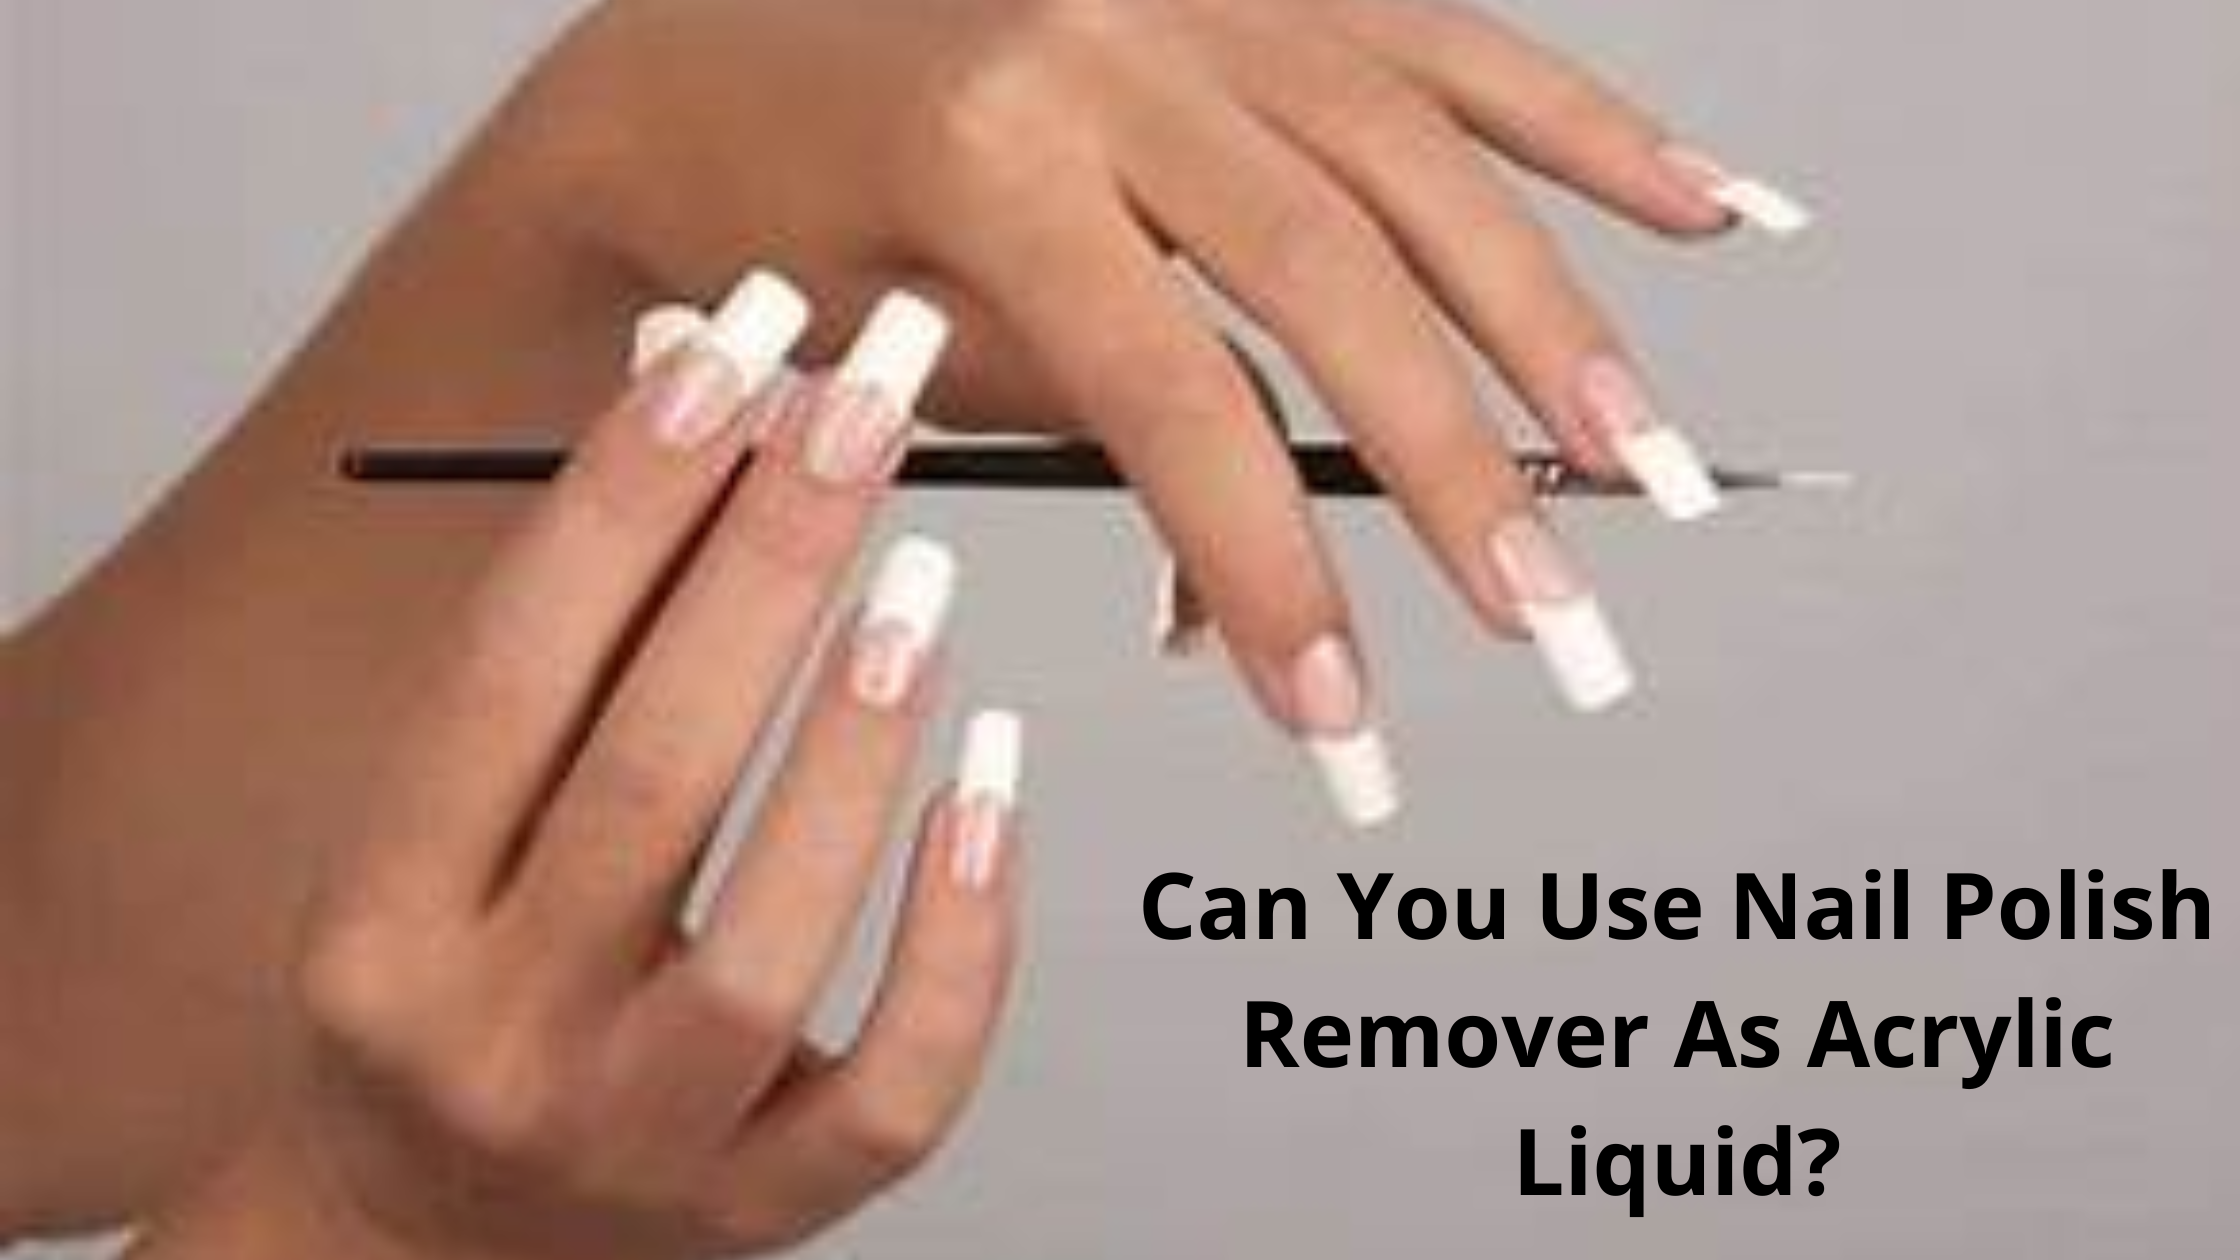 Can You Use Nail Polish Remover As Acrylic Liquid?